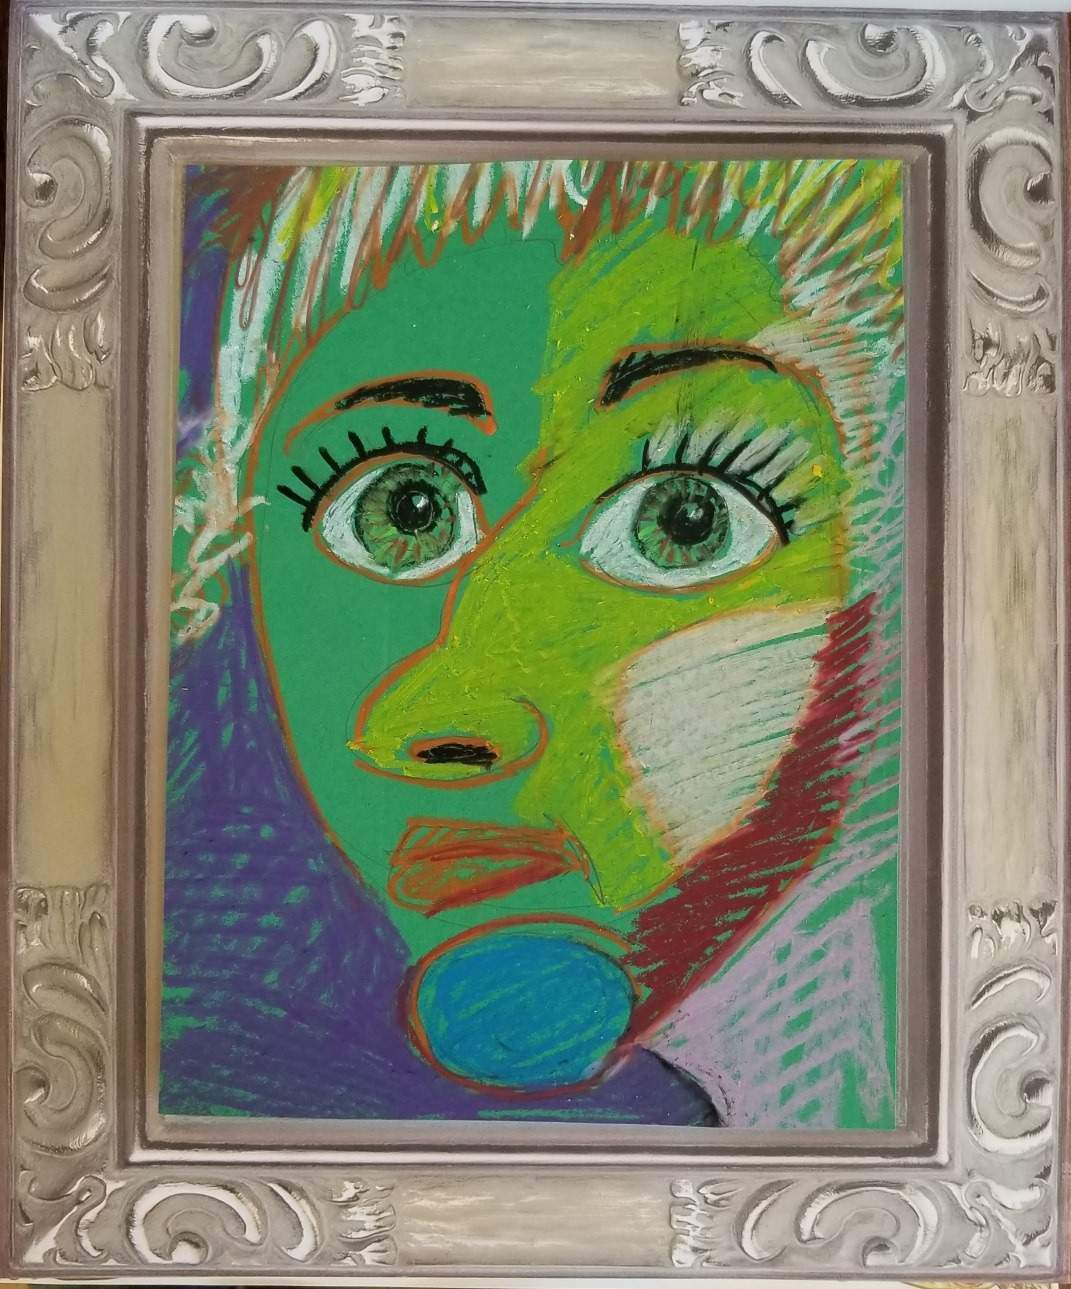 Picasso Style Self-Portraits (April 23) 1